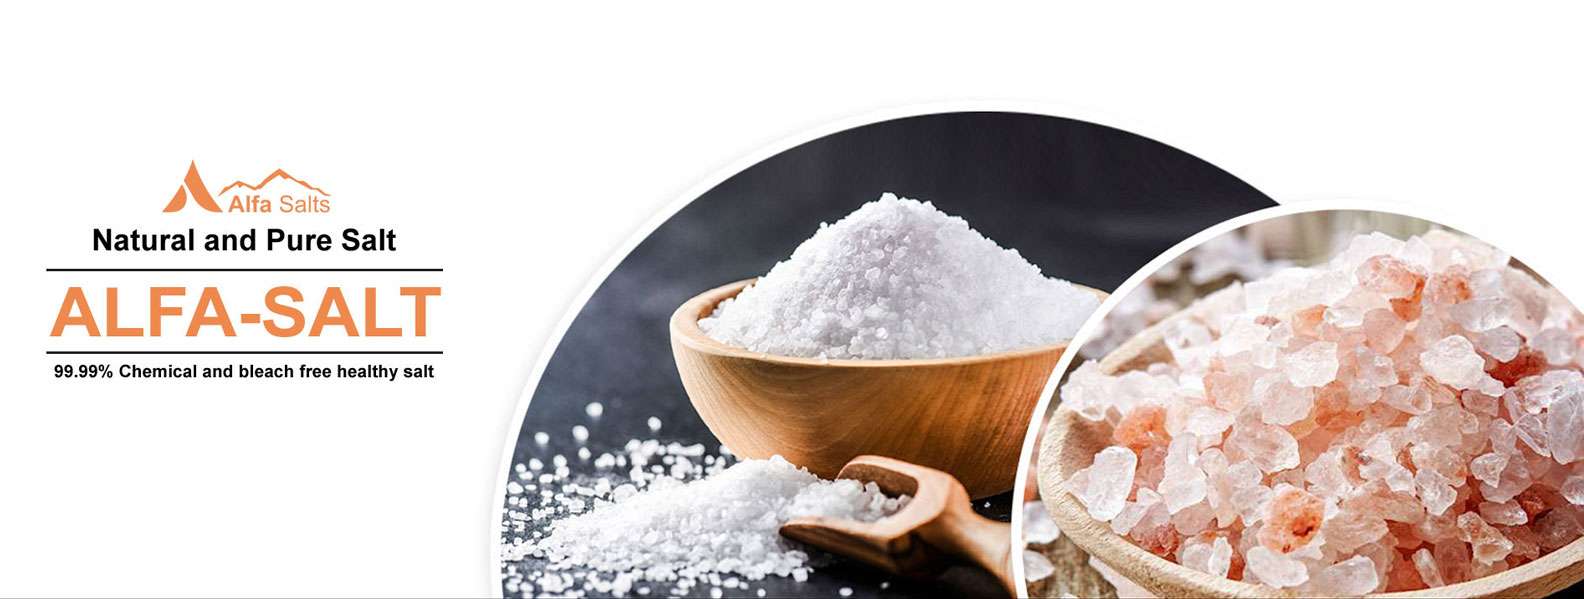 Alfa Salts Edible salt